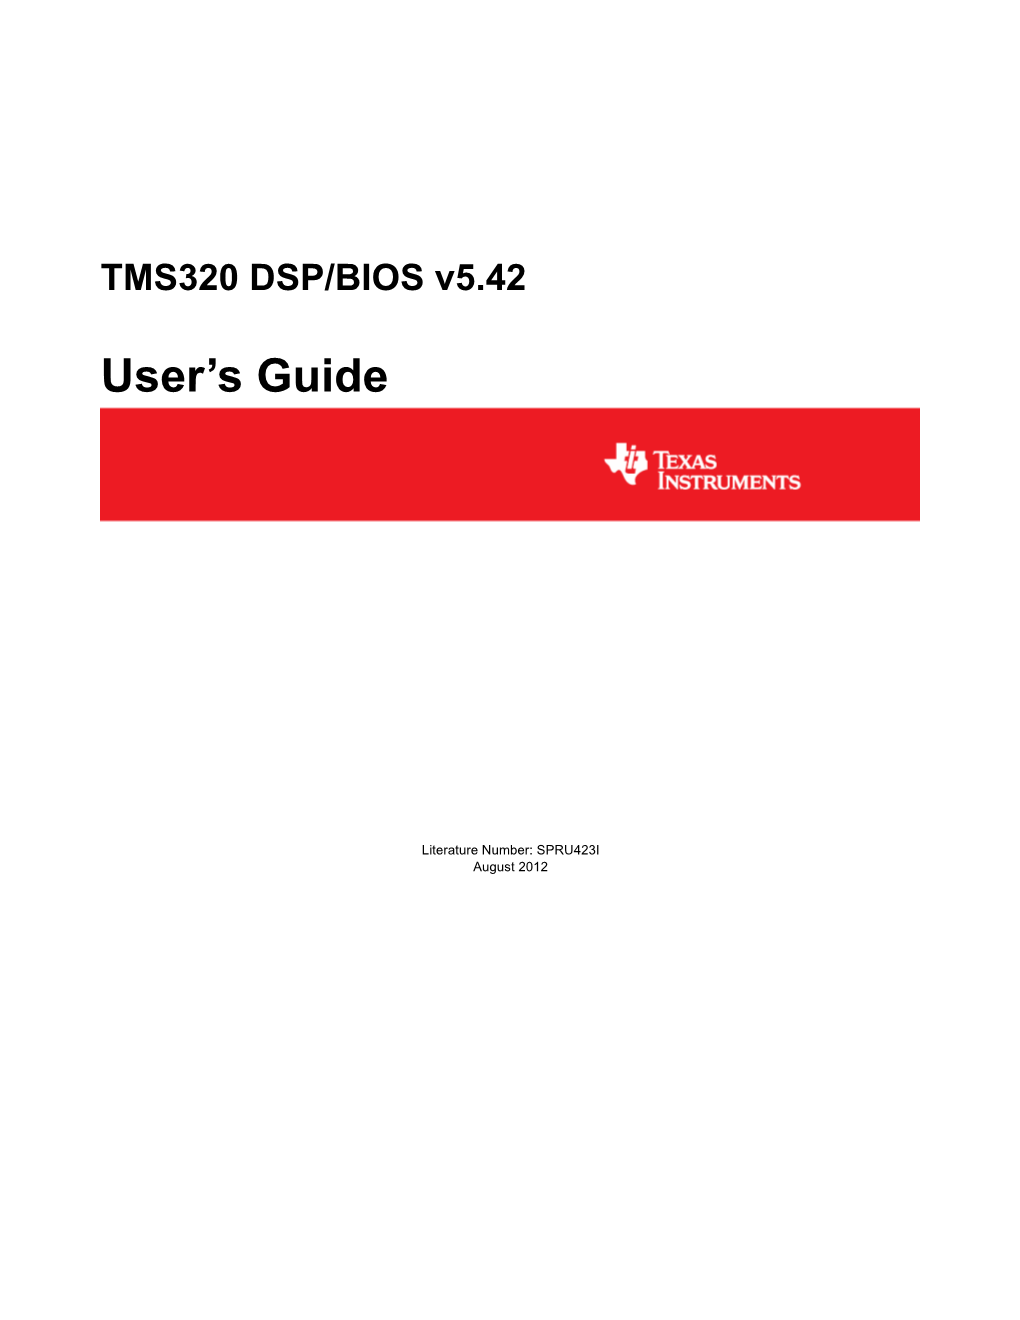 TMS320 DSP/BIOS V5.42 User's Guide